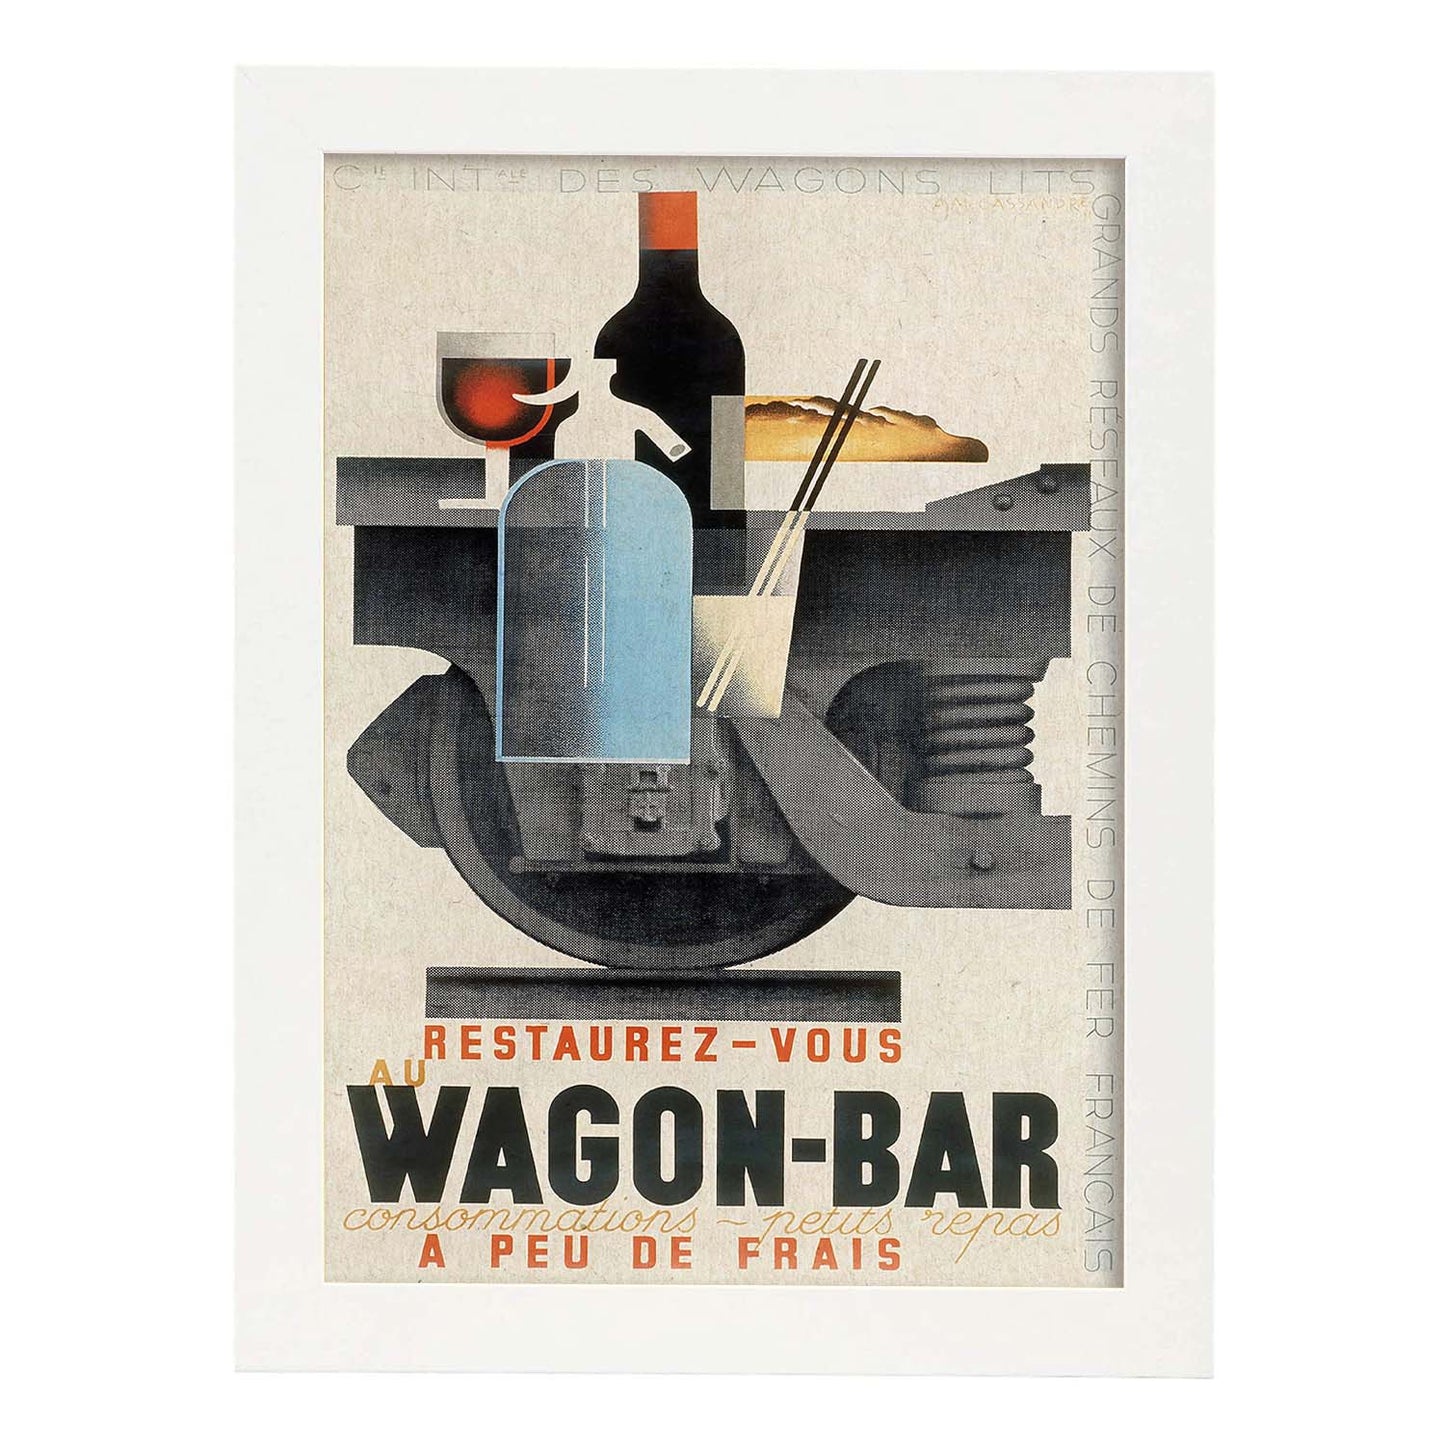 Poster vintage. Cartel vintage anuncio Wagon-Bar a Peu de Frais.-Artwork-Nacnic-A4-Marco Blanco-Nacnic Estudio SL